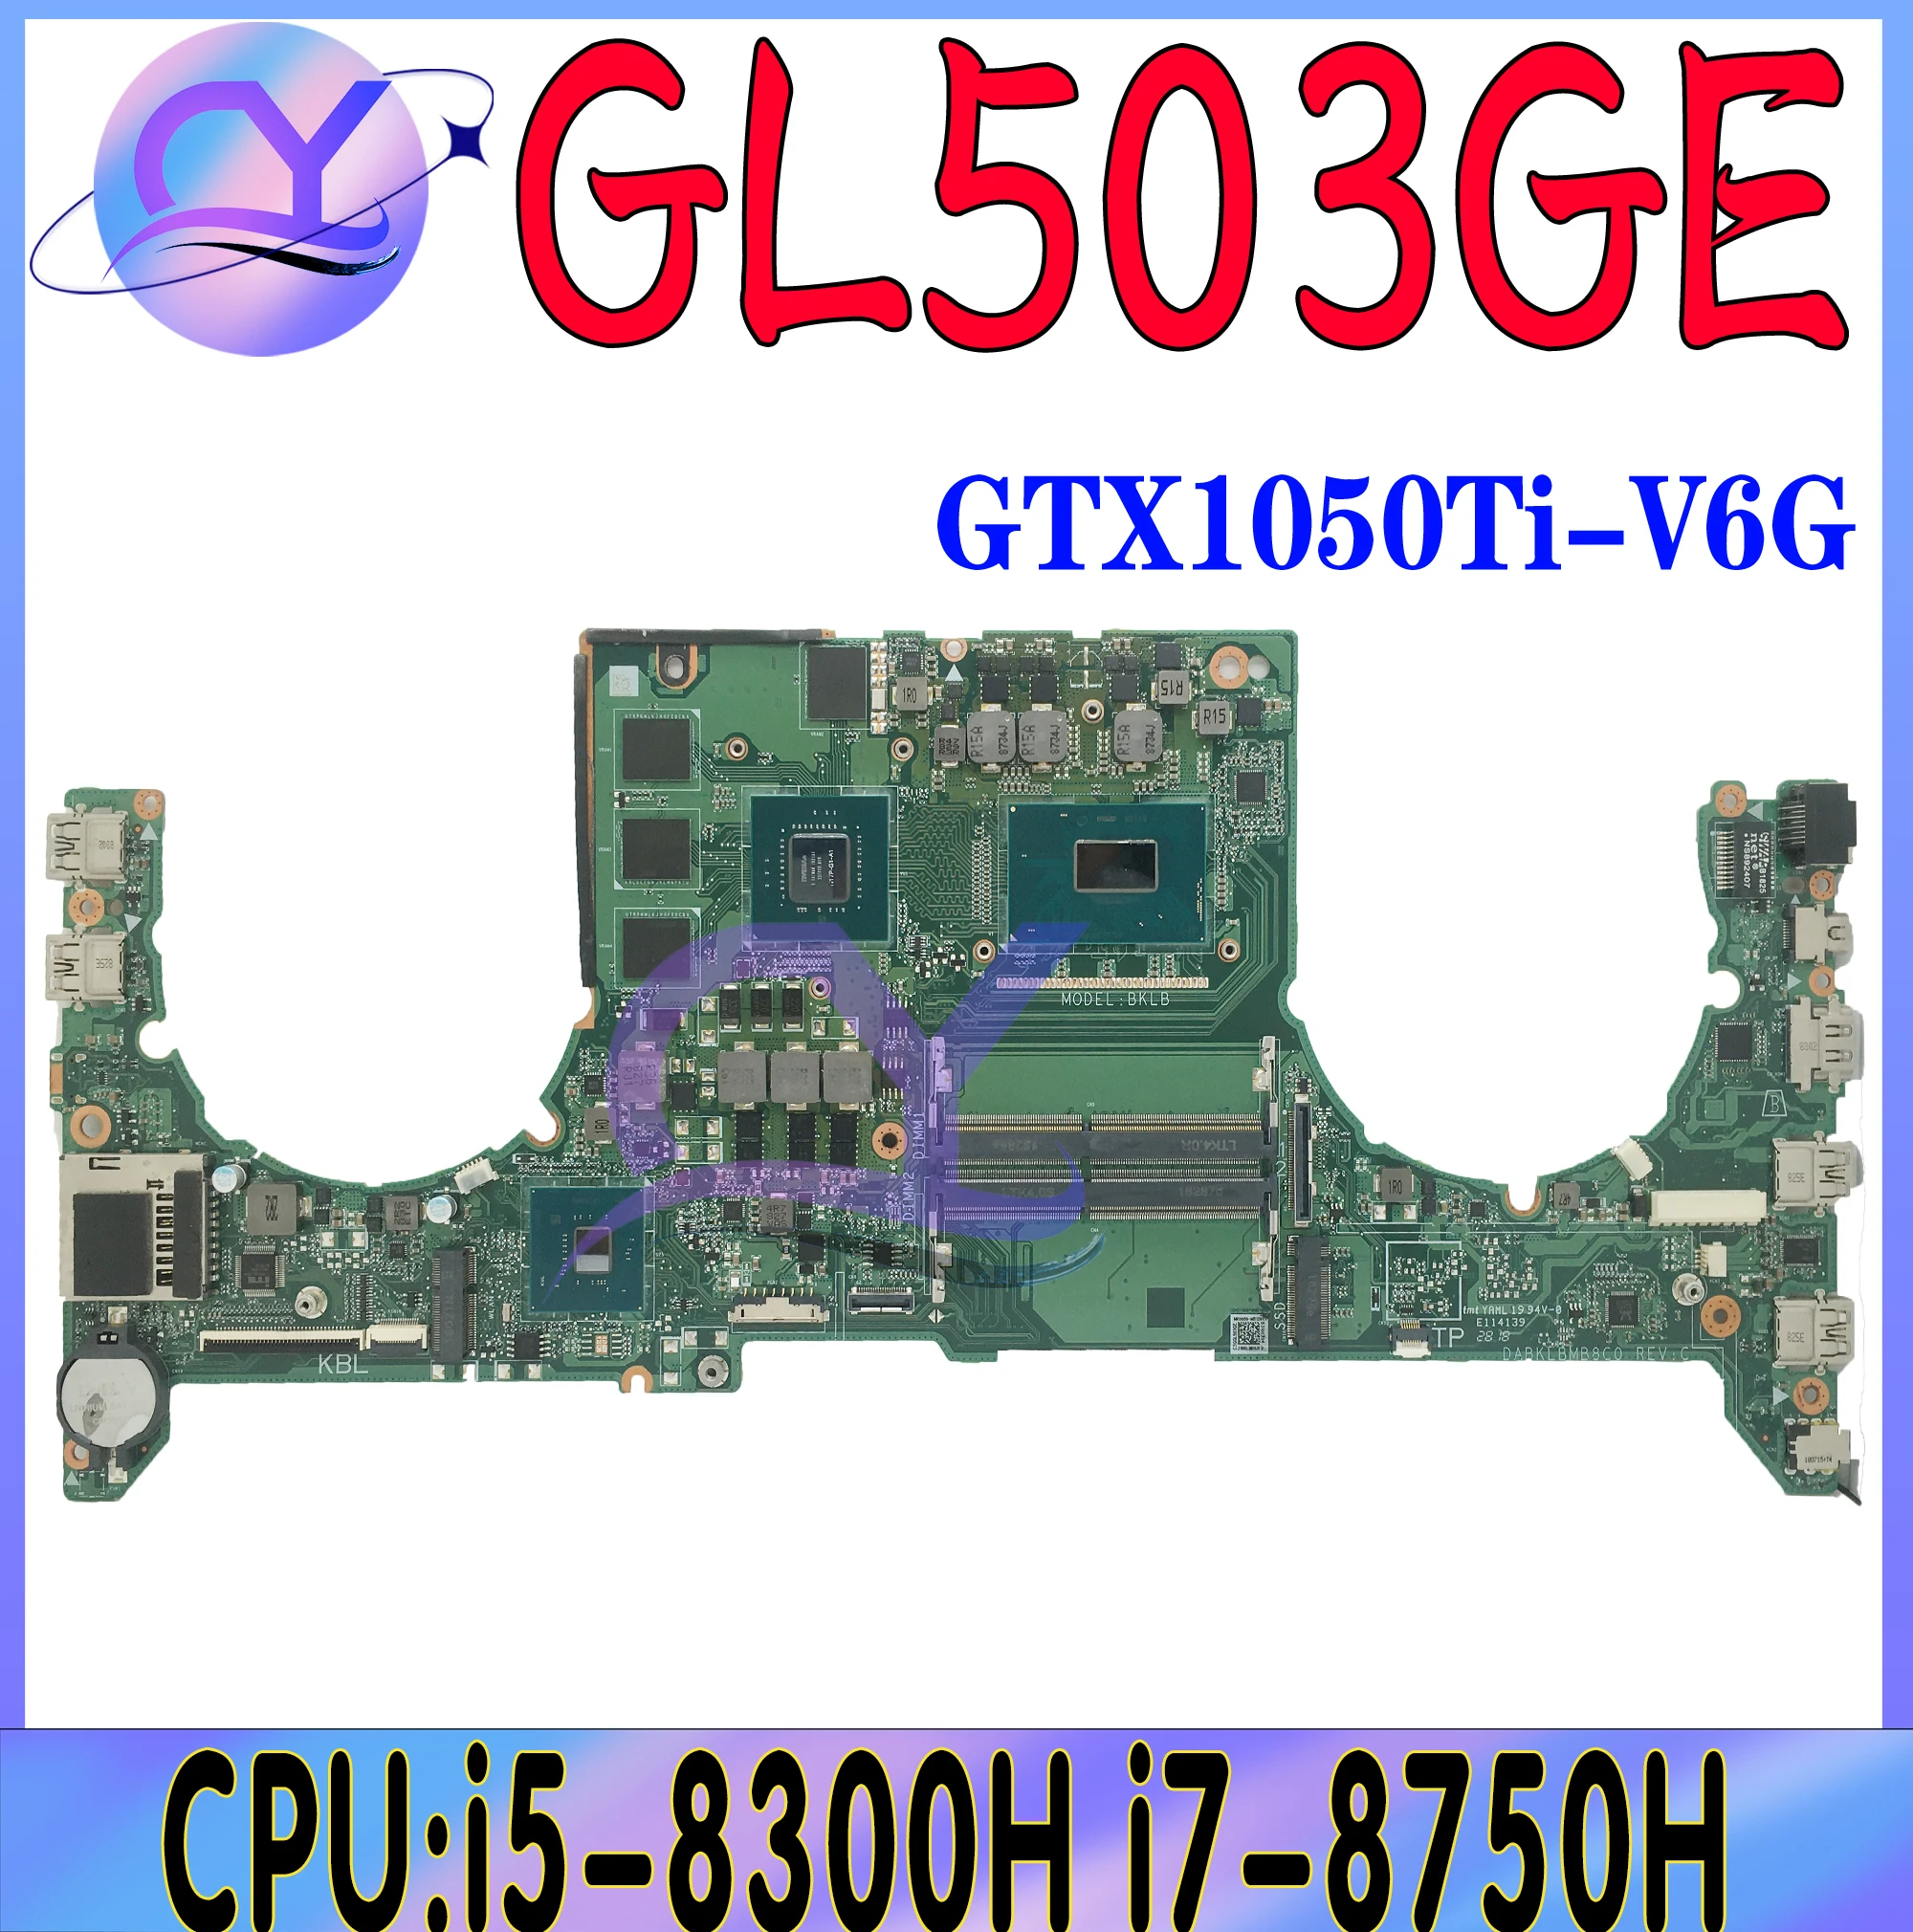 GL503GE Mainboard For ASUS ROG Strix S5BE GL503G PX503GE MW503GE DABKLBMB8C0 Laptop Motherboard With i5 i7-8th Gen GTX1050Ti/V4G